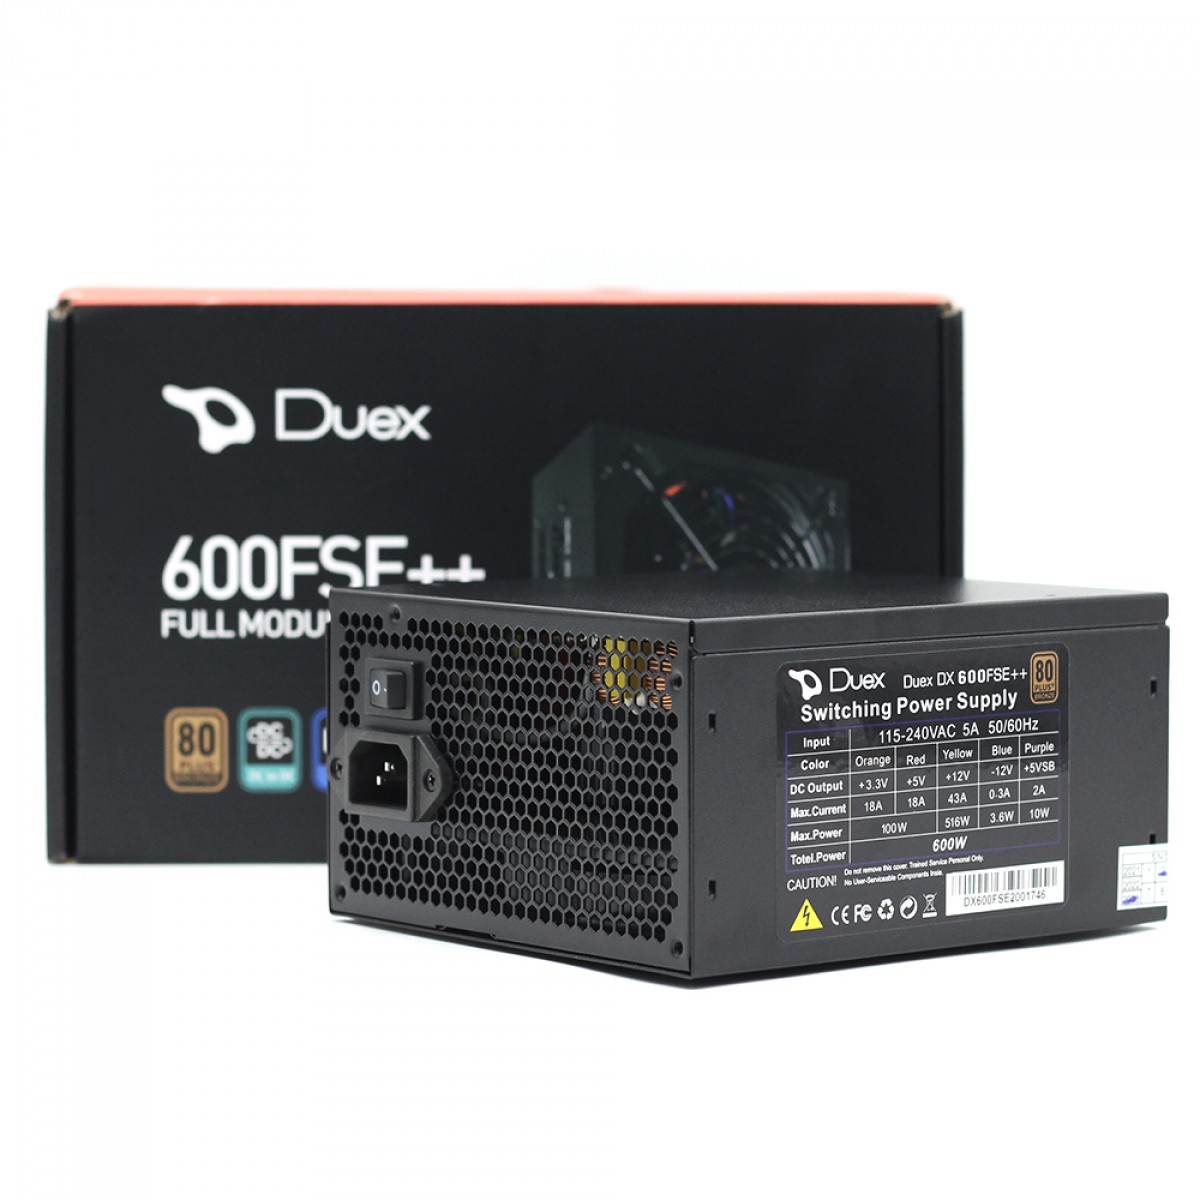 Fonte Duex 600FSE++, 600W, 80 Plus Bronze, PFC Ativo, Full Modular, DX600FSE++